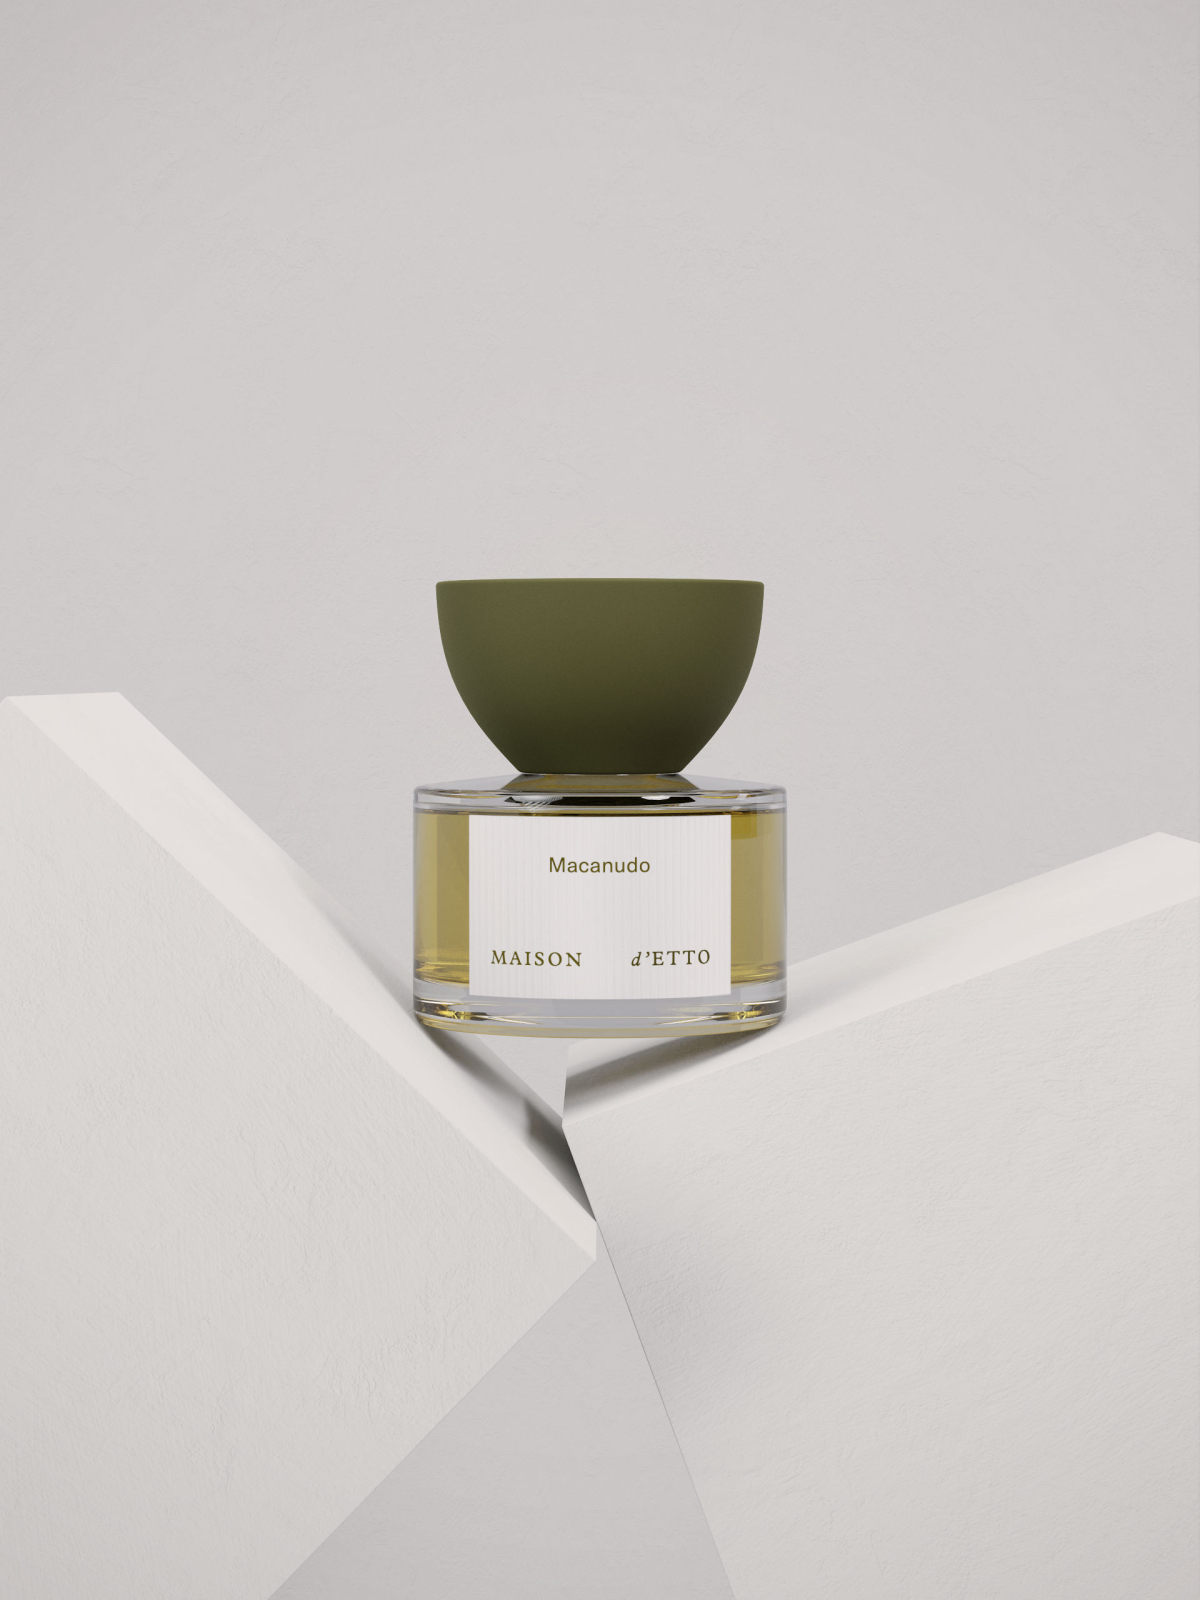 11 Maison Detto V3 - Maison d'Etto Macanudo perfume CGI - Sonny Nguyen